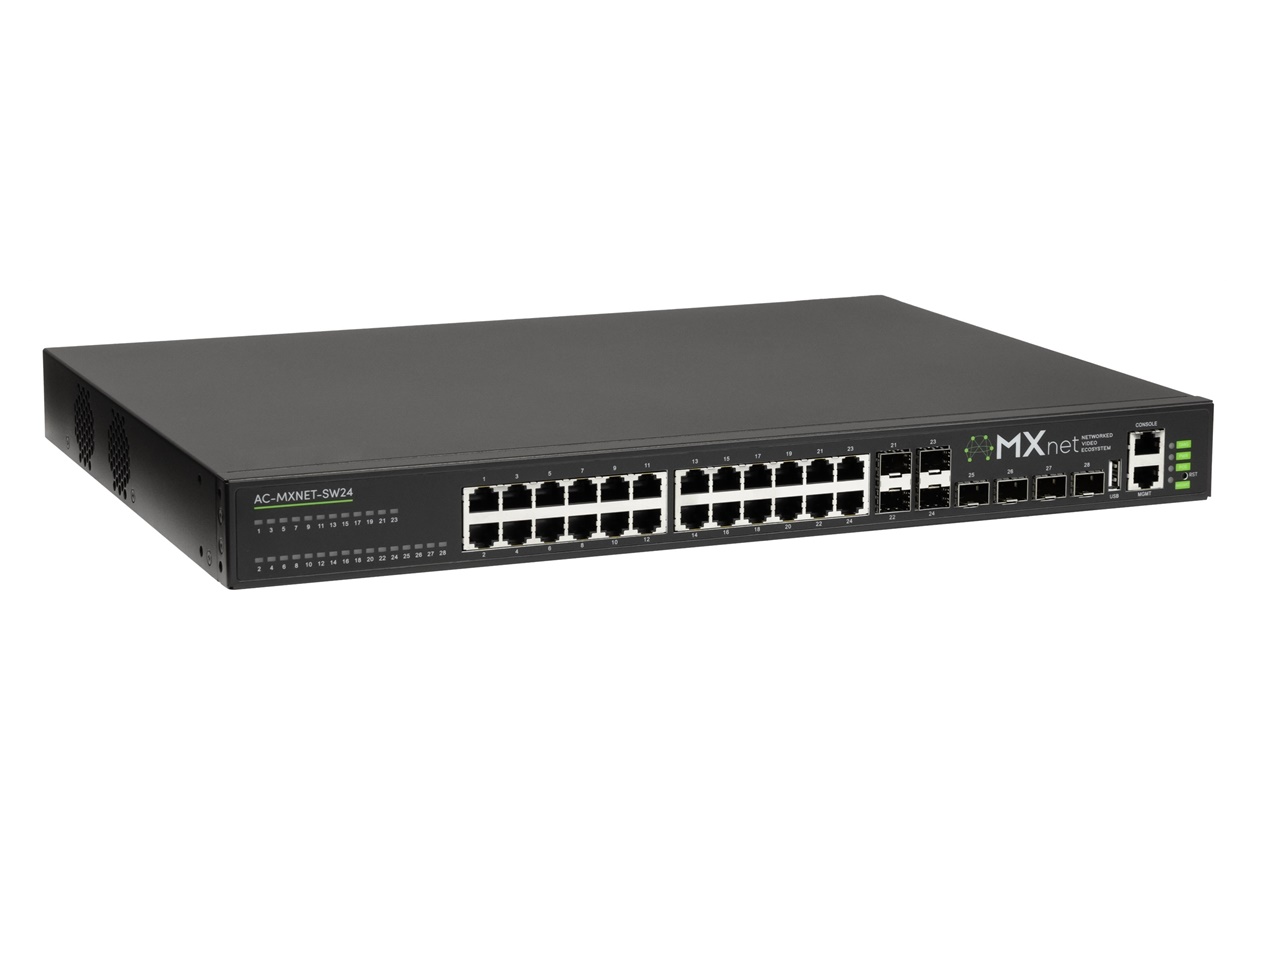 AVPro Edge AC-MXNET-SW24 MXNet 24 Port Network Switch